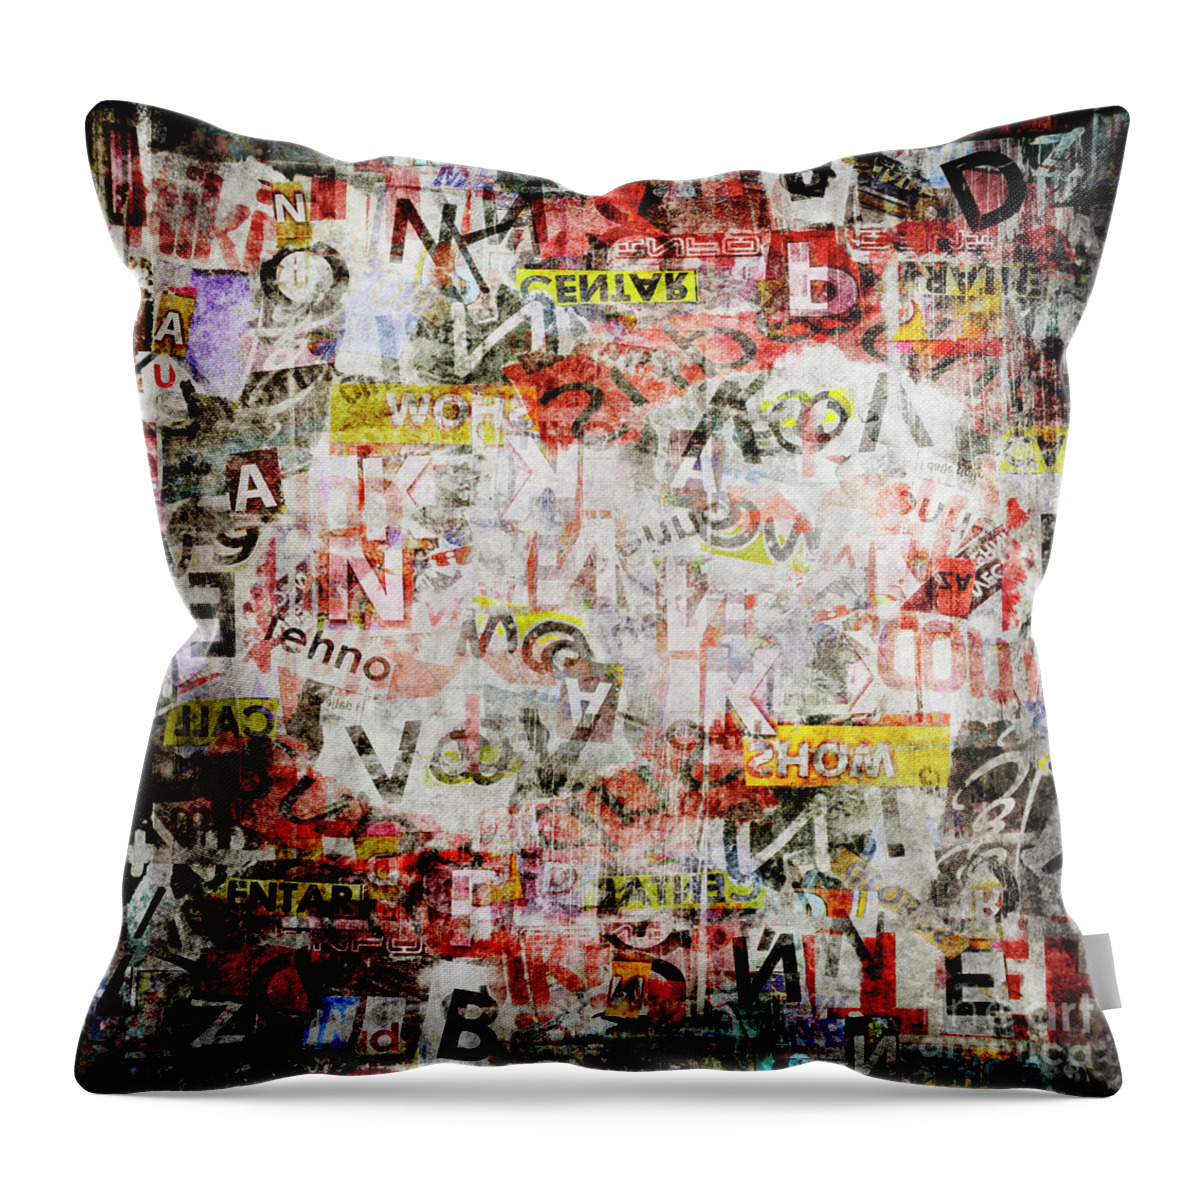 Grunge Throw Pillow featuring the digital art Grunge textured background by Jelena Jovanovic